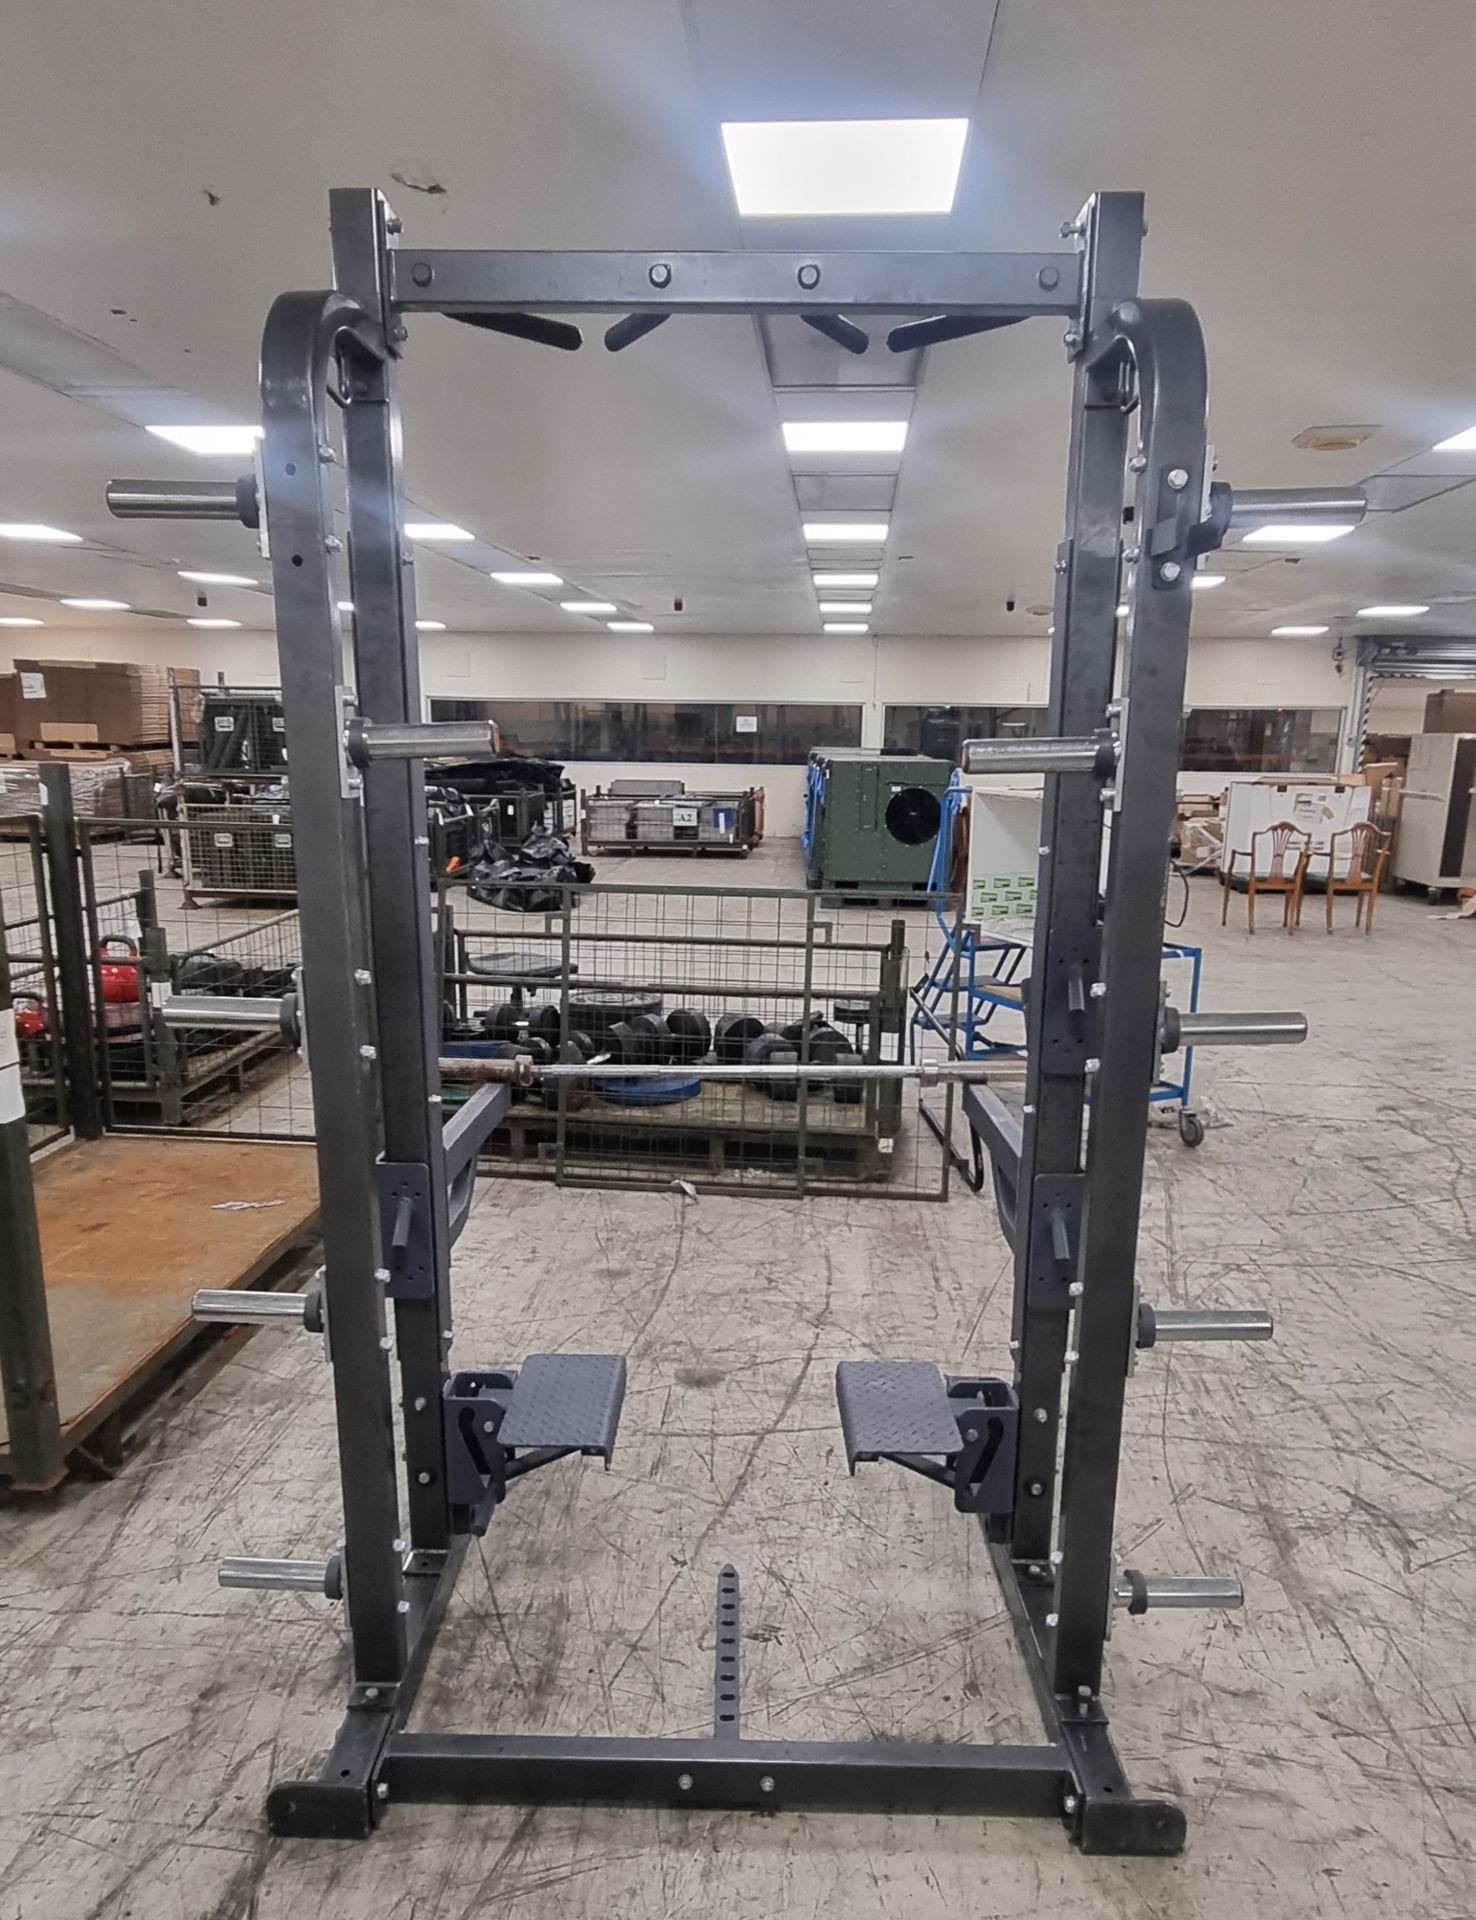 Spark multi-gym squat rack with power lift bar - 150 L x 170 W x 245 H cm - Image 3 of 7